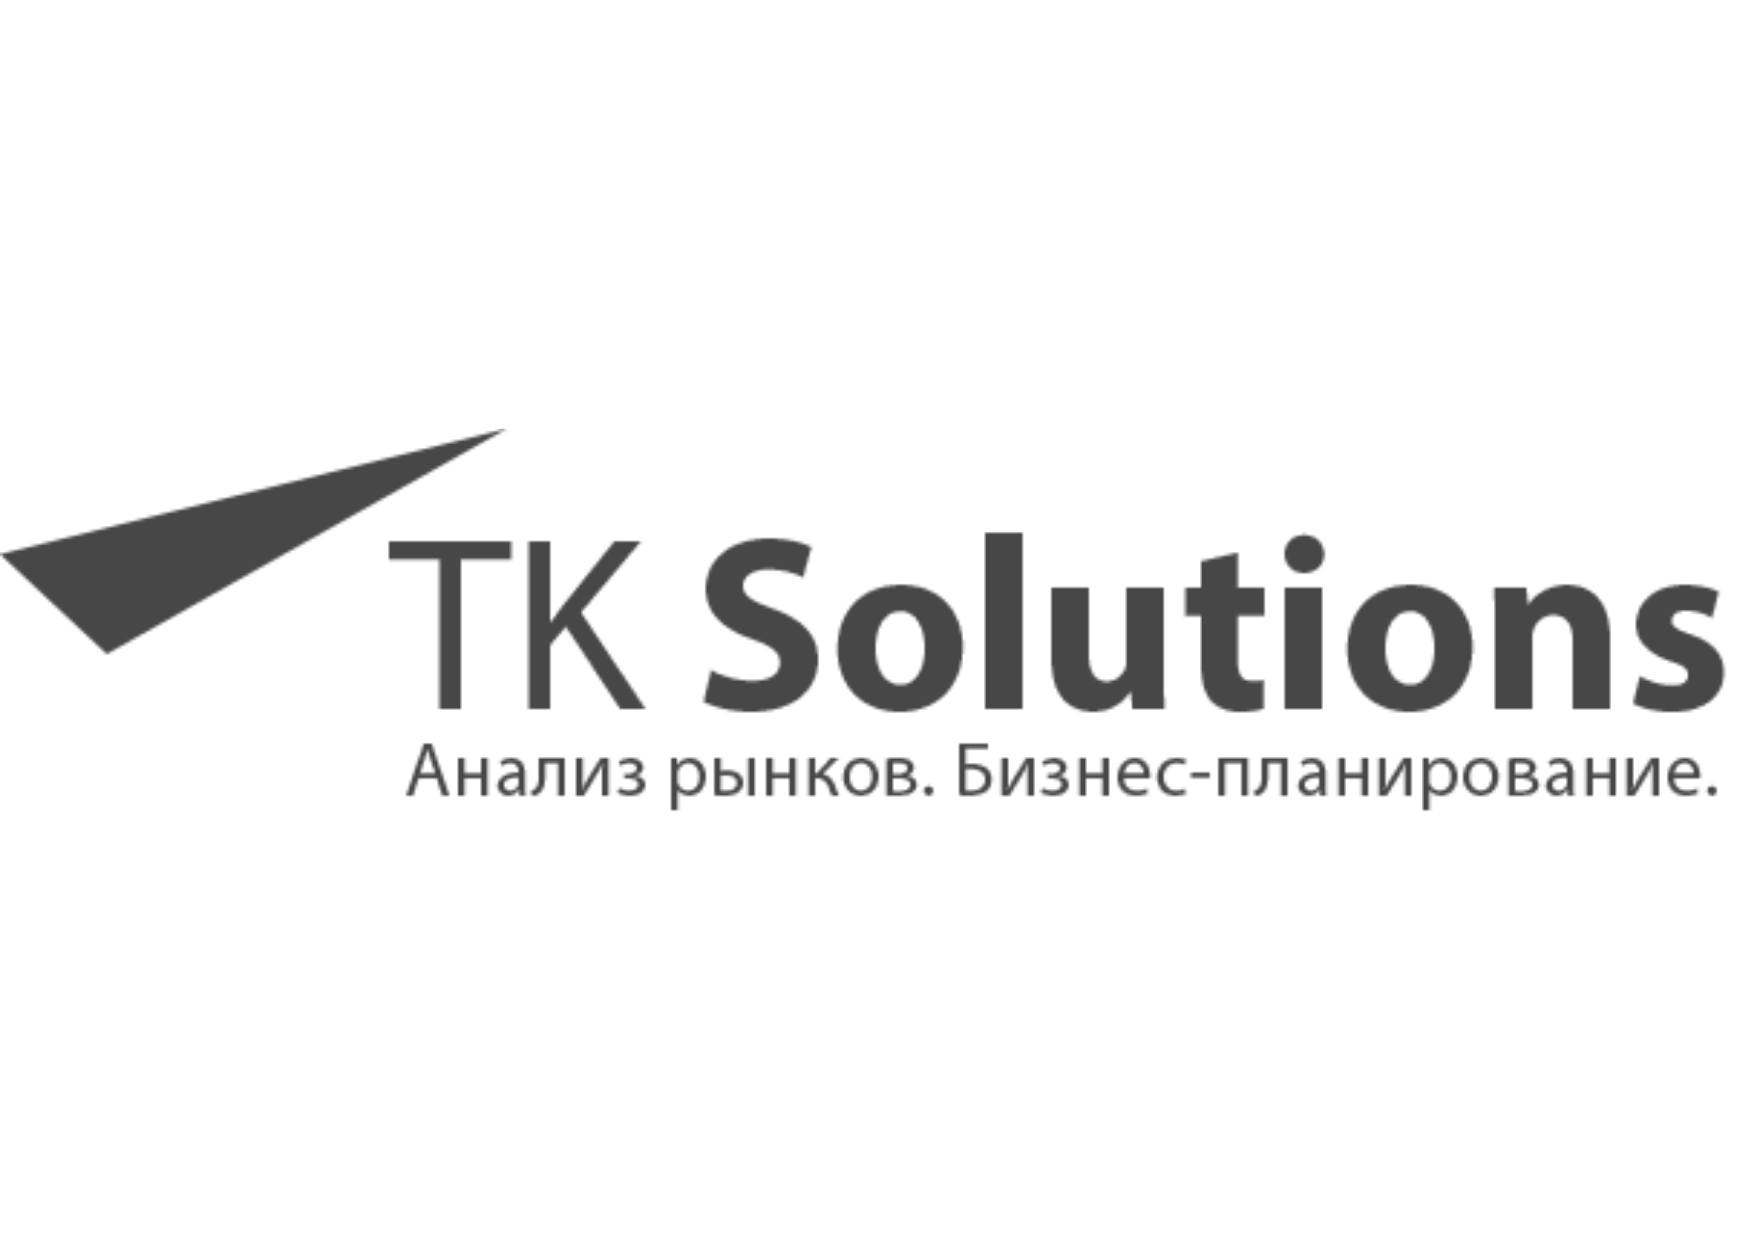 TK Solutions